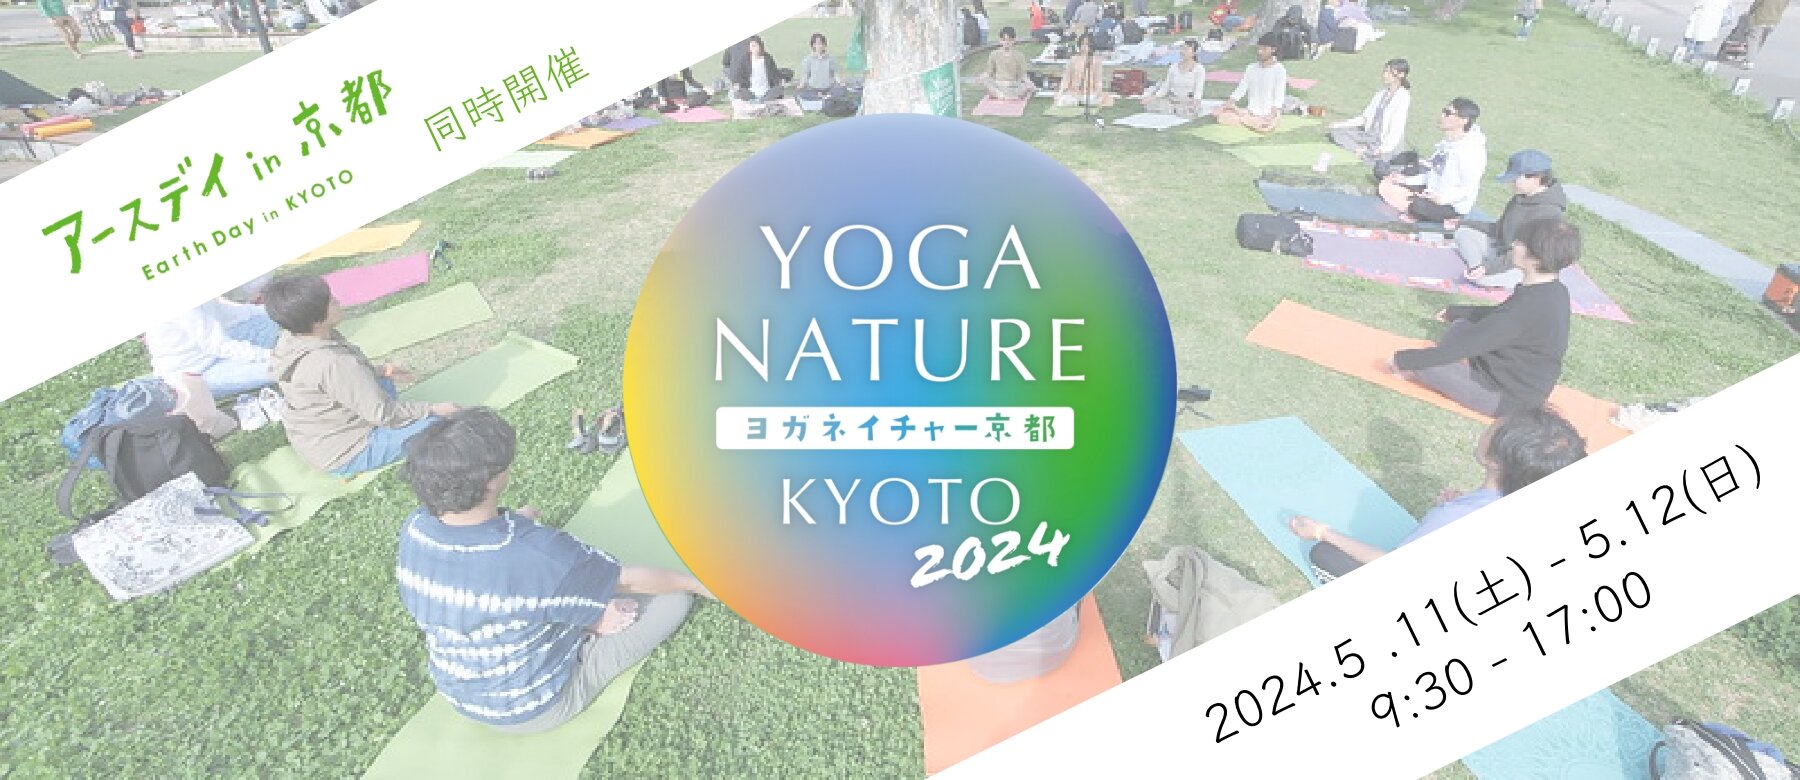 Yoga Nature Kyoto 2024